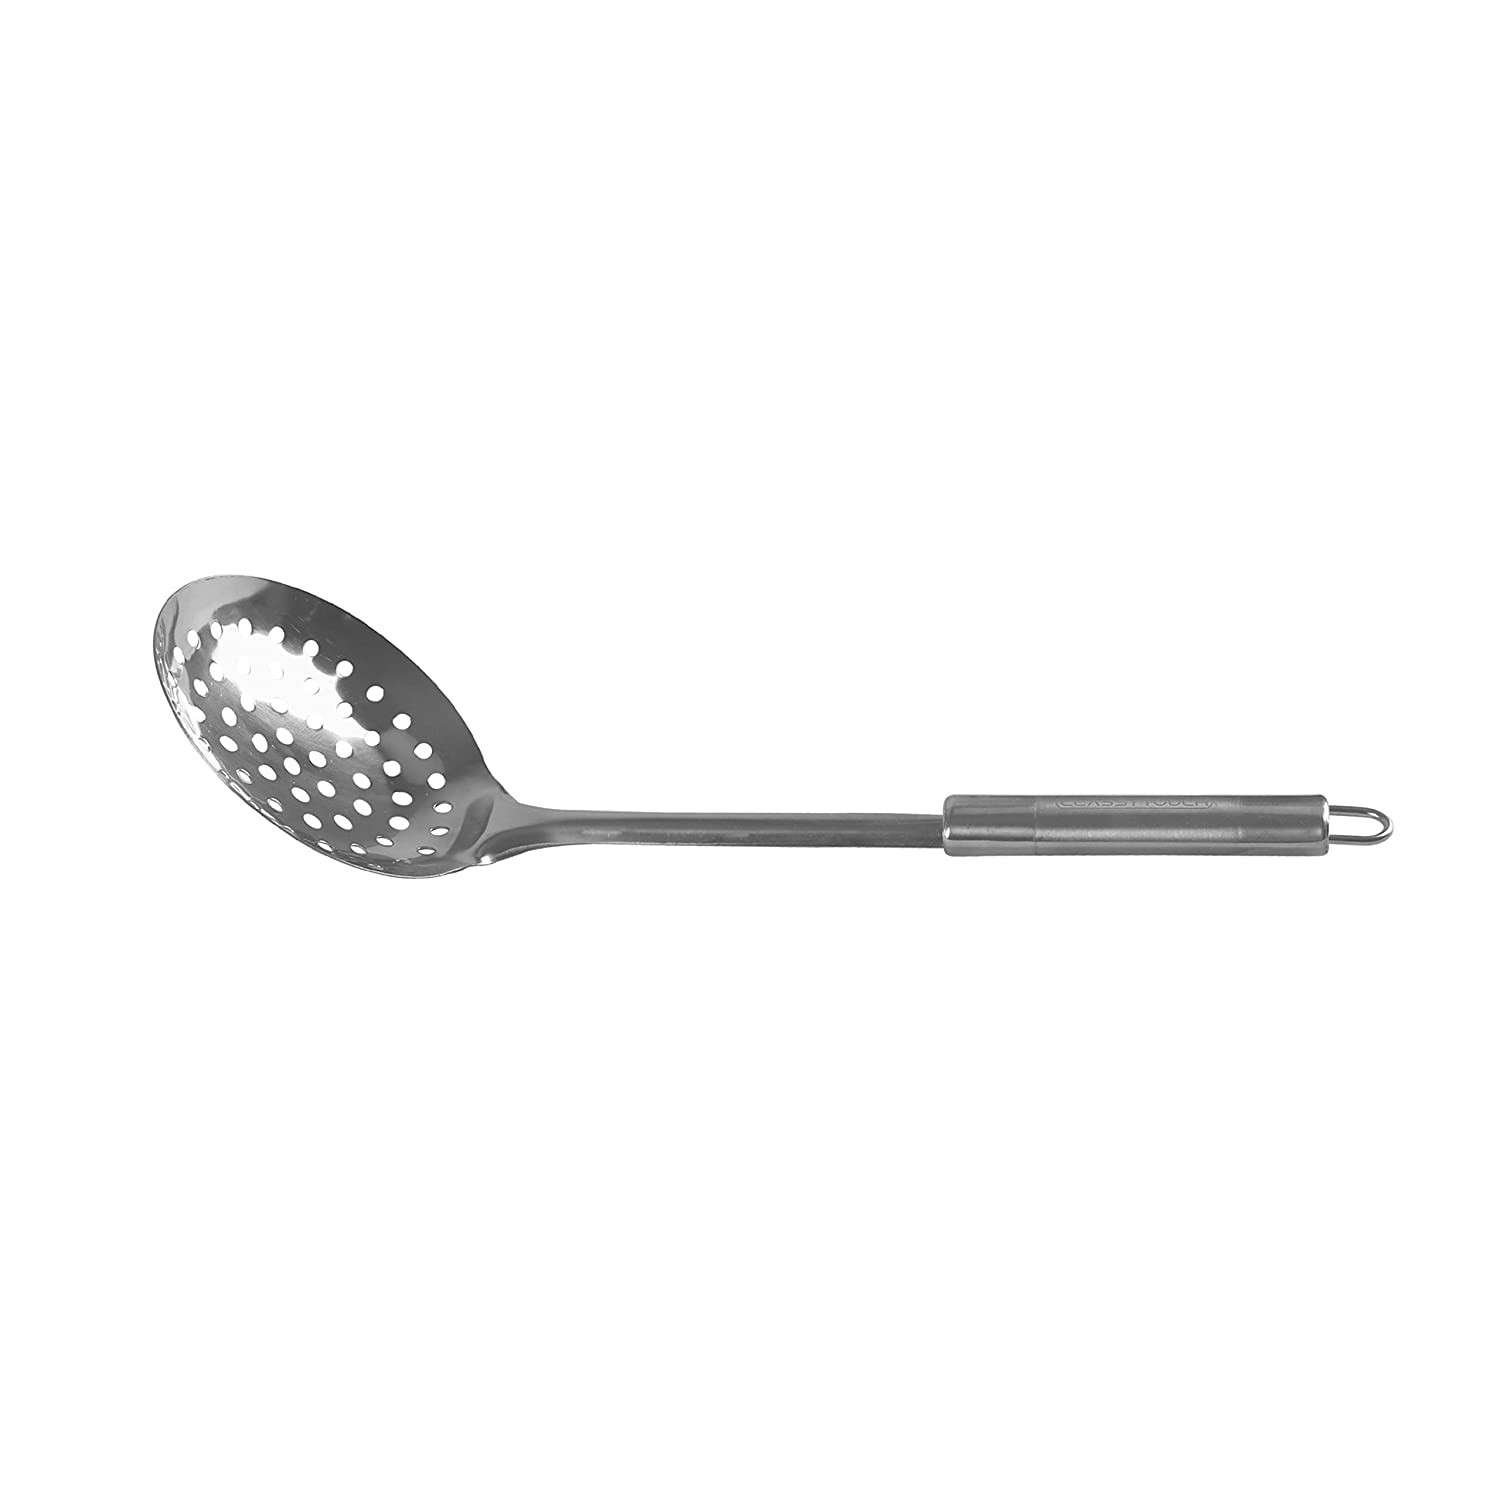 Kuber Industries Stainless Steel Jhara/Skimmer/Strainer Steel Frying Spoon/deep Fry for Kitchen (Silver)